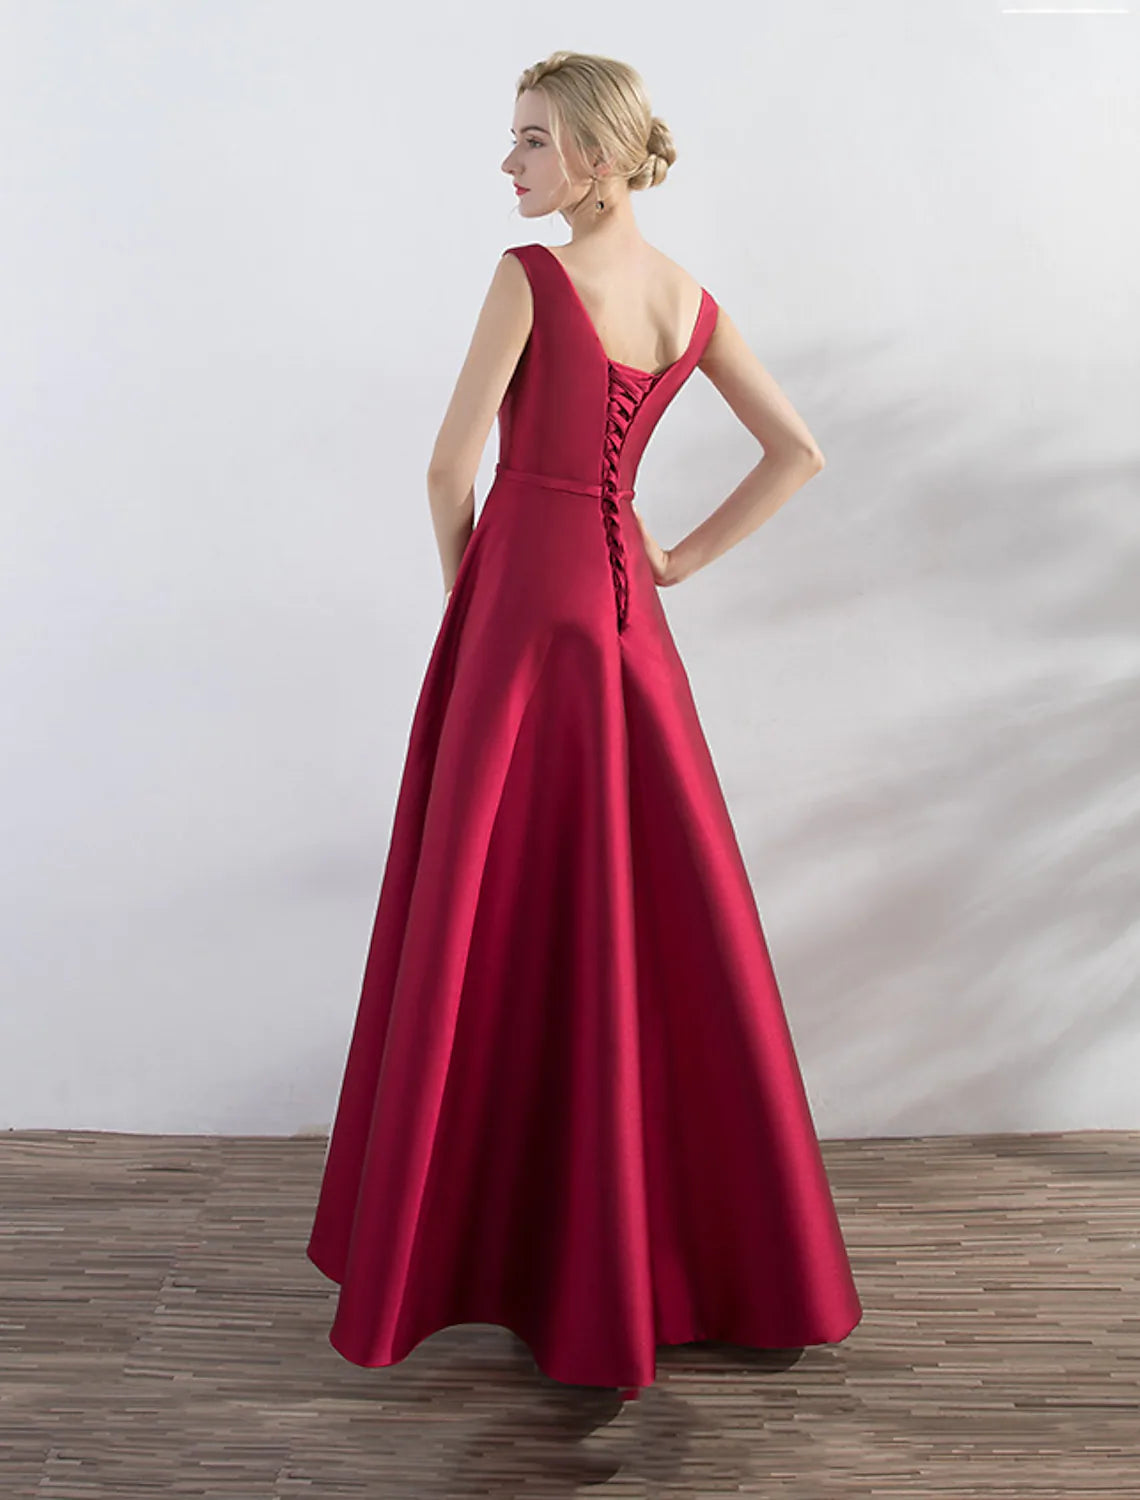 A-Line Evening Gown Elegant Minimalist Dress Party Wear Wedding Guest Asymmetrical Sleeveless Satin with Sleek